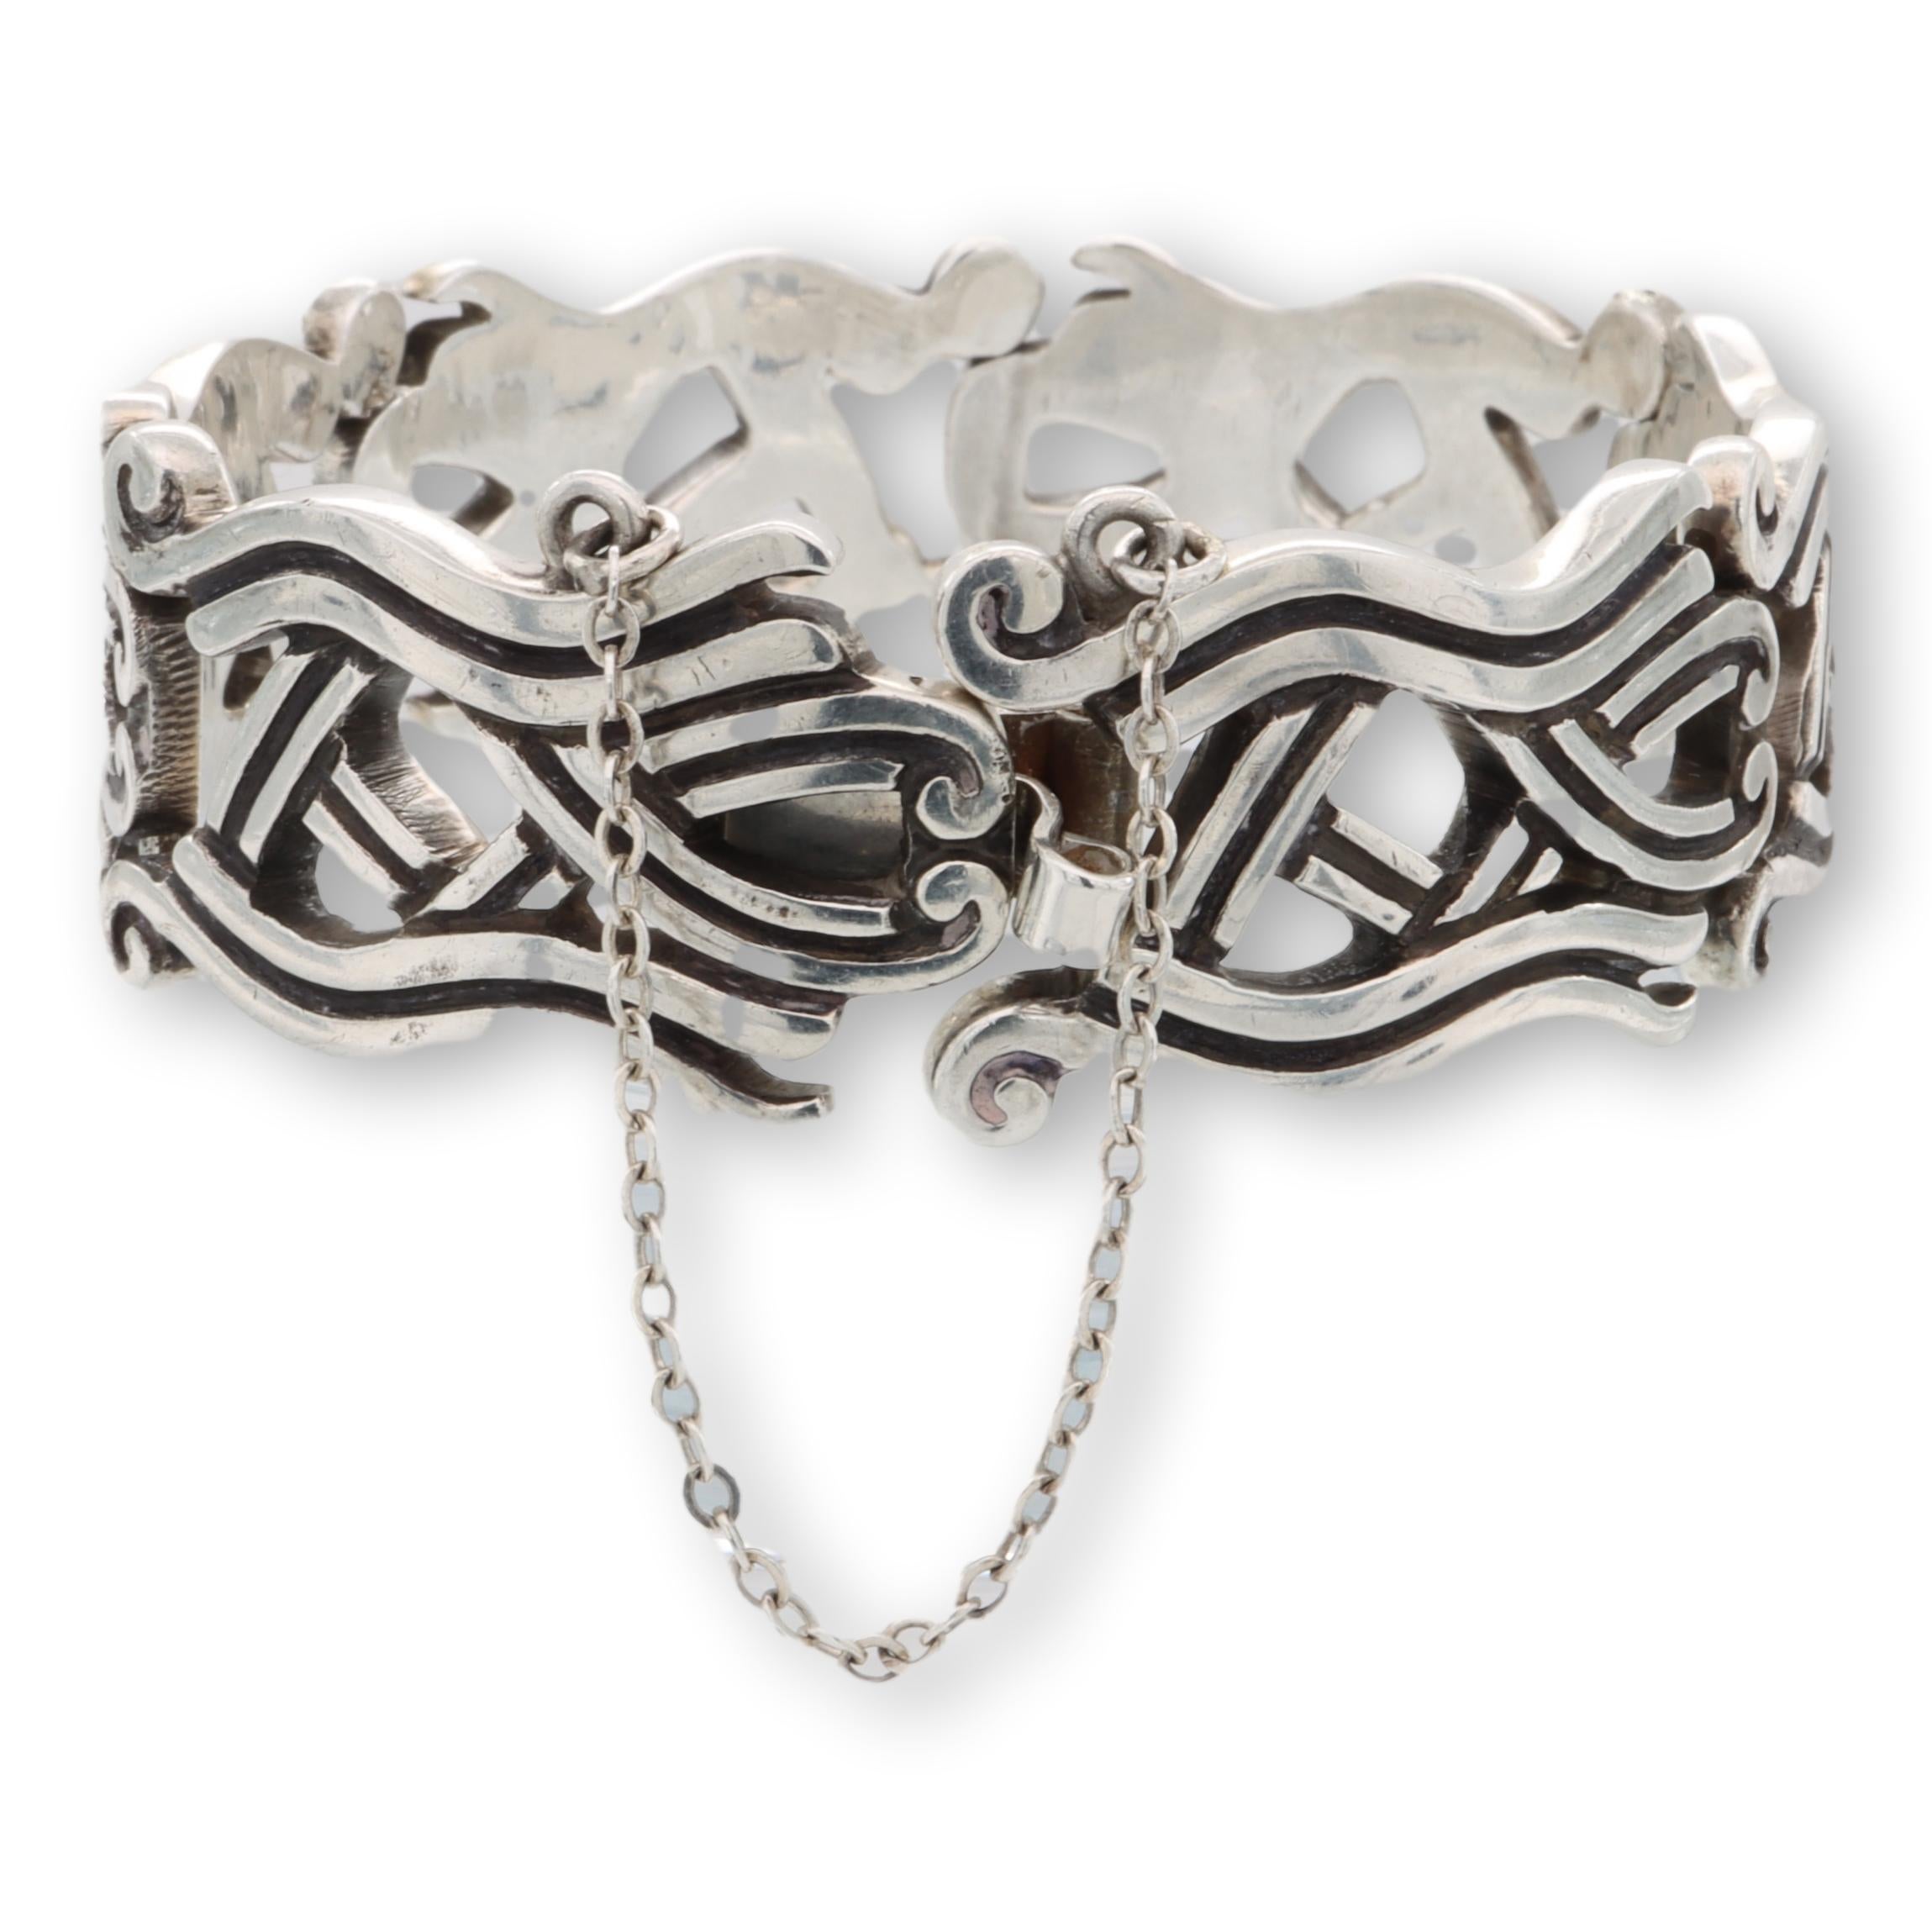 taxco silver bracelet vintage